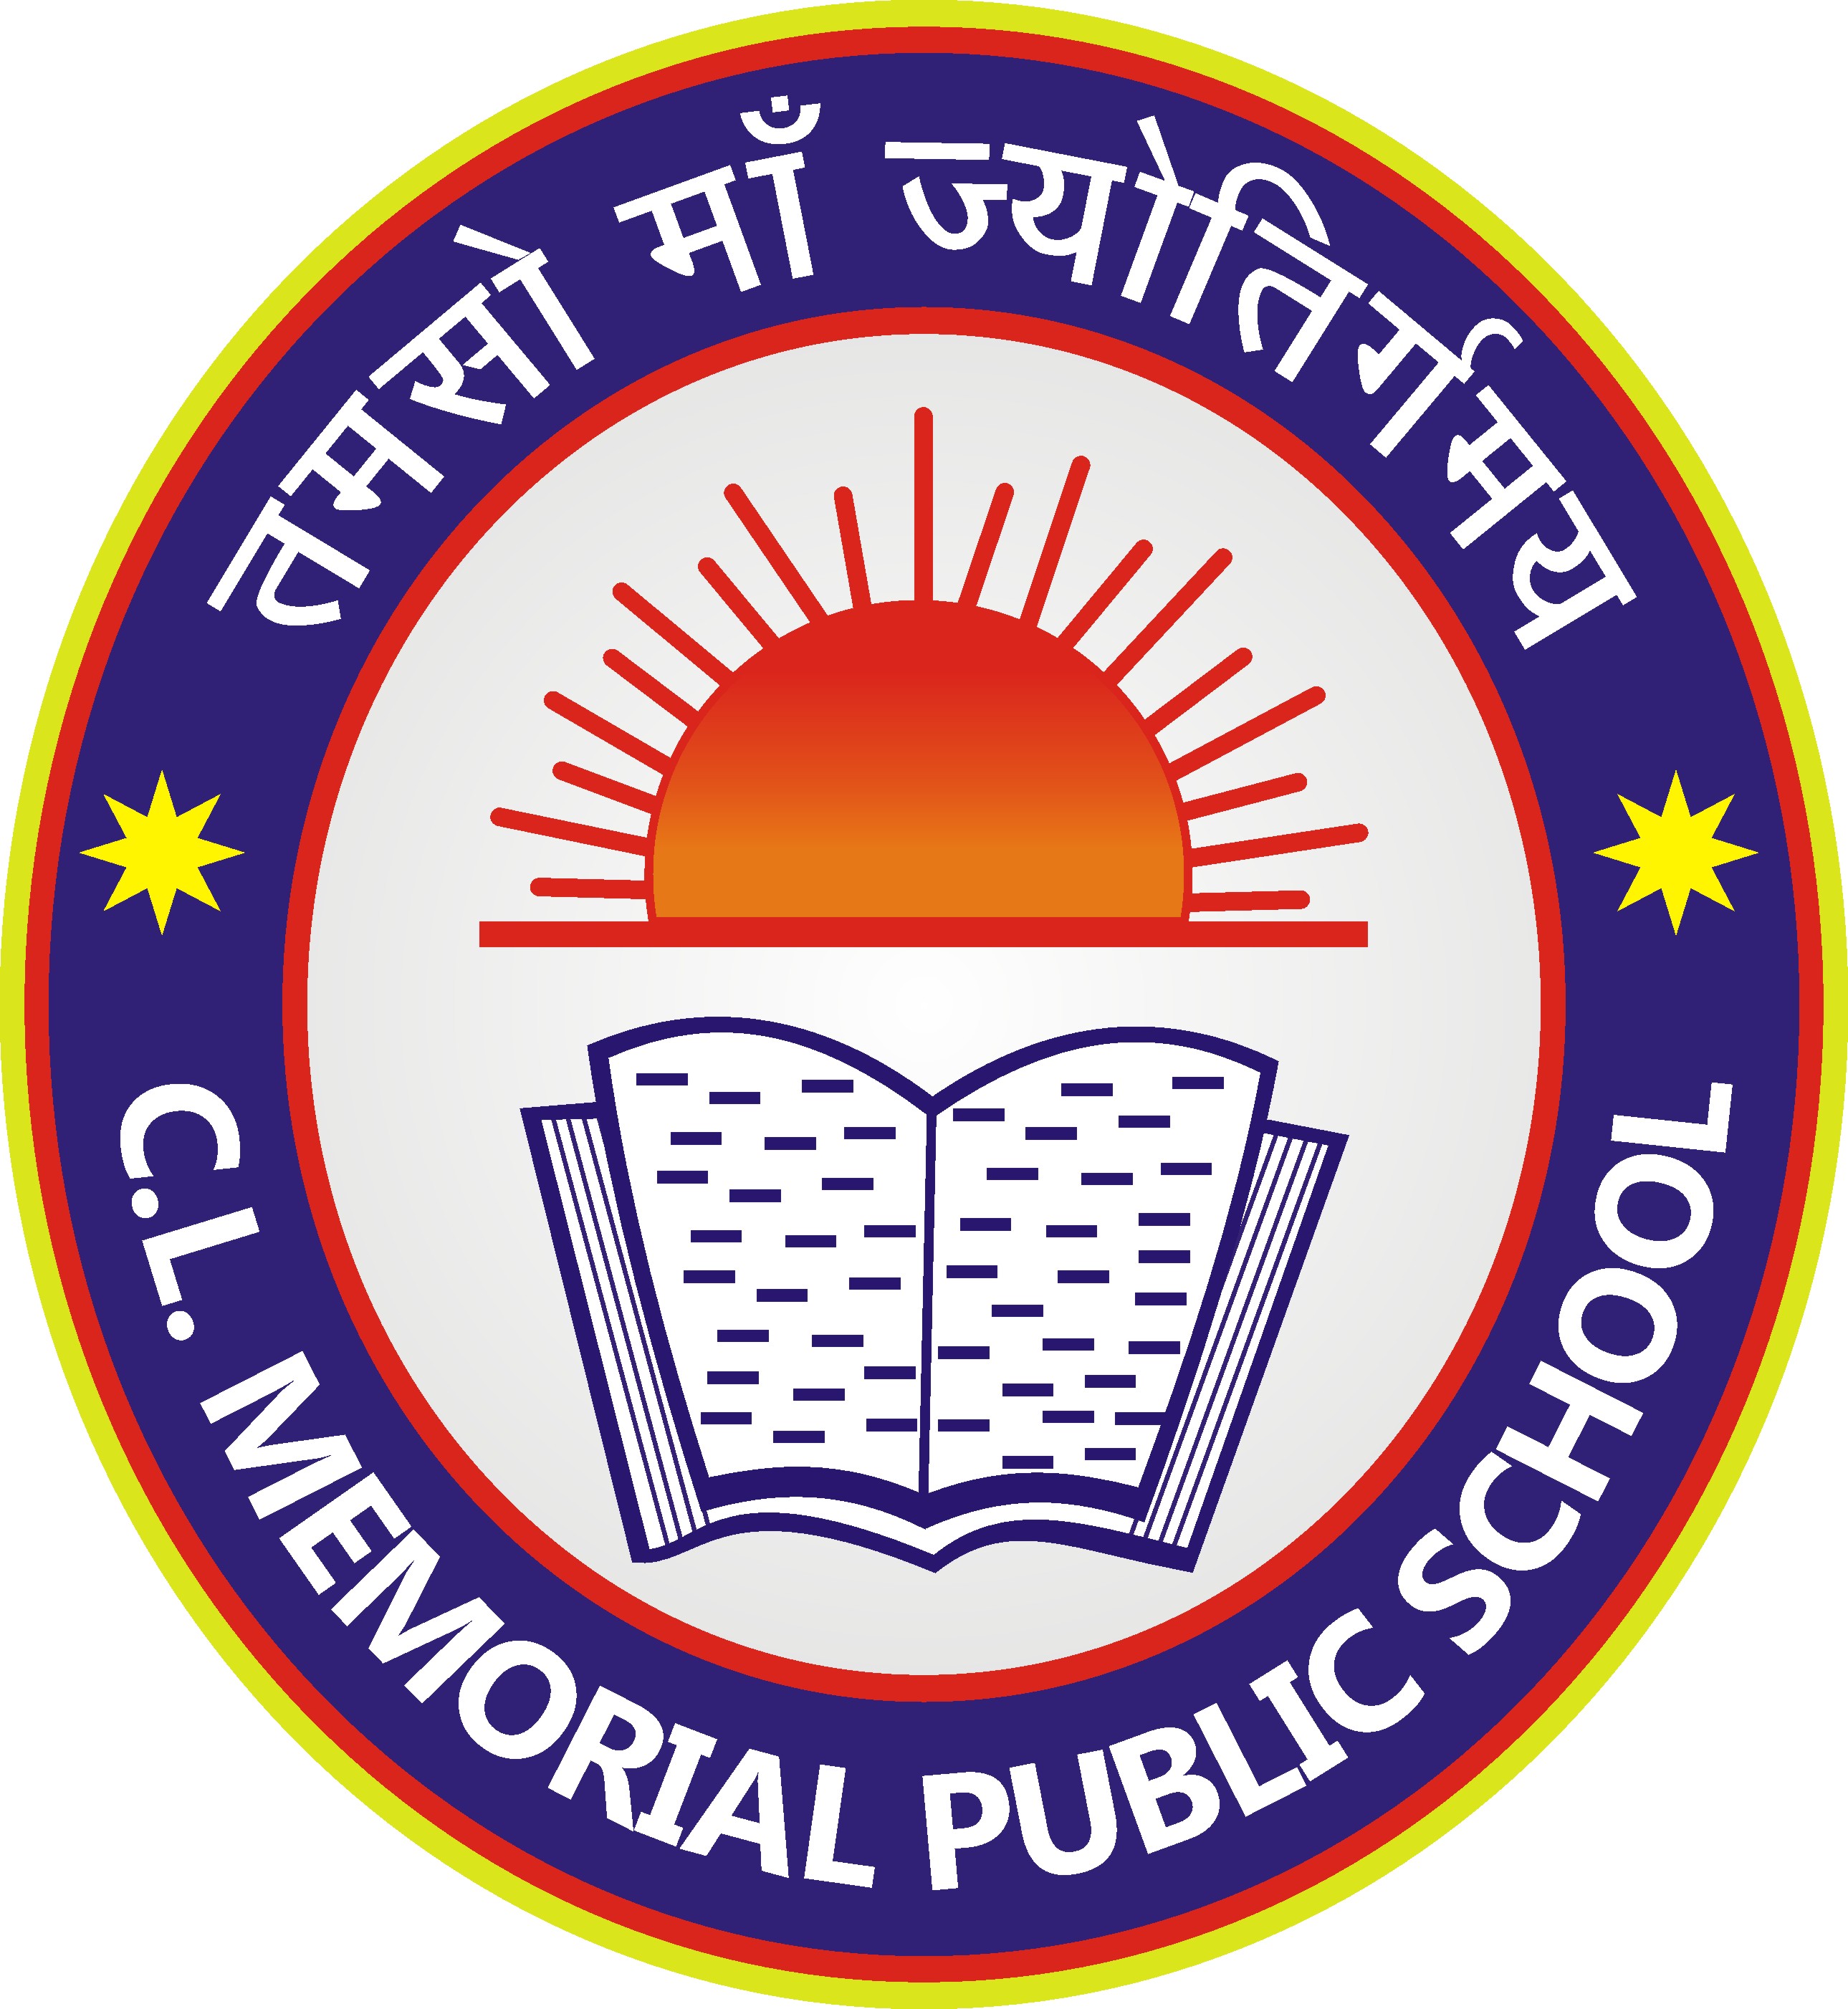 C.L. Memorial Public School|Schools|Education